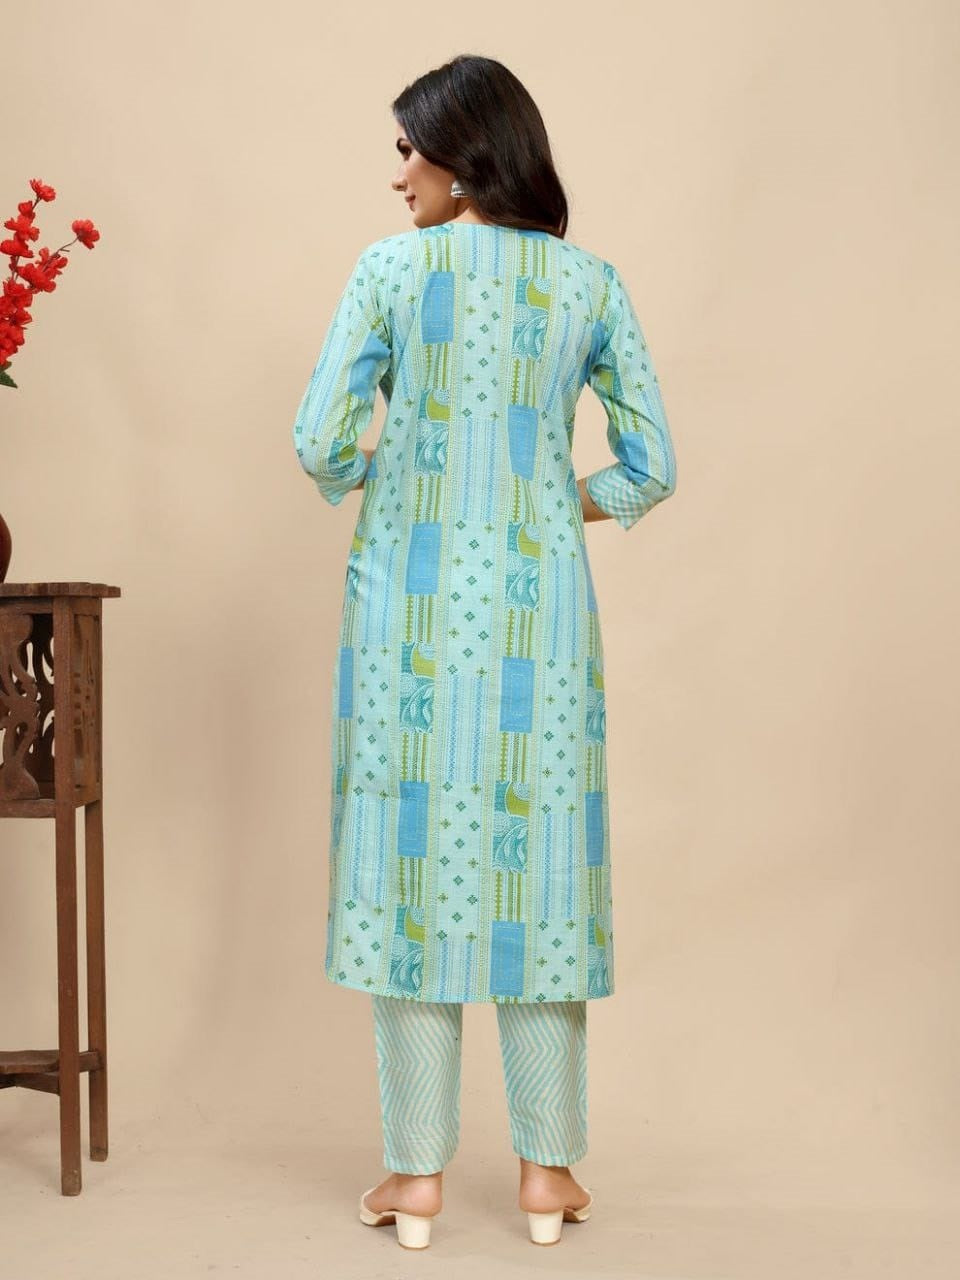 Women's Sky Blue Cotton Printed Kurti with Pant - Dwija Fashion